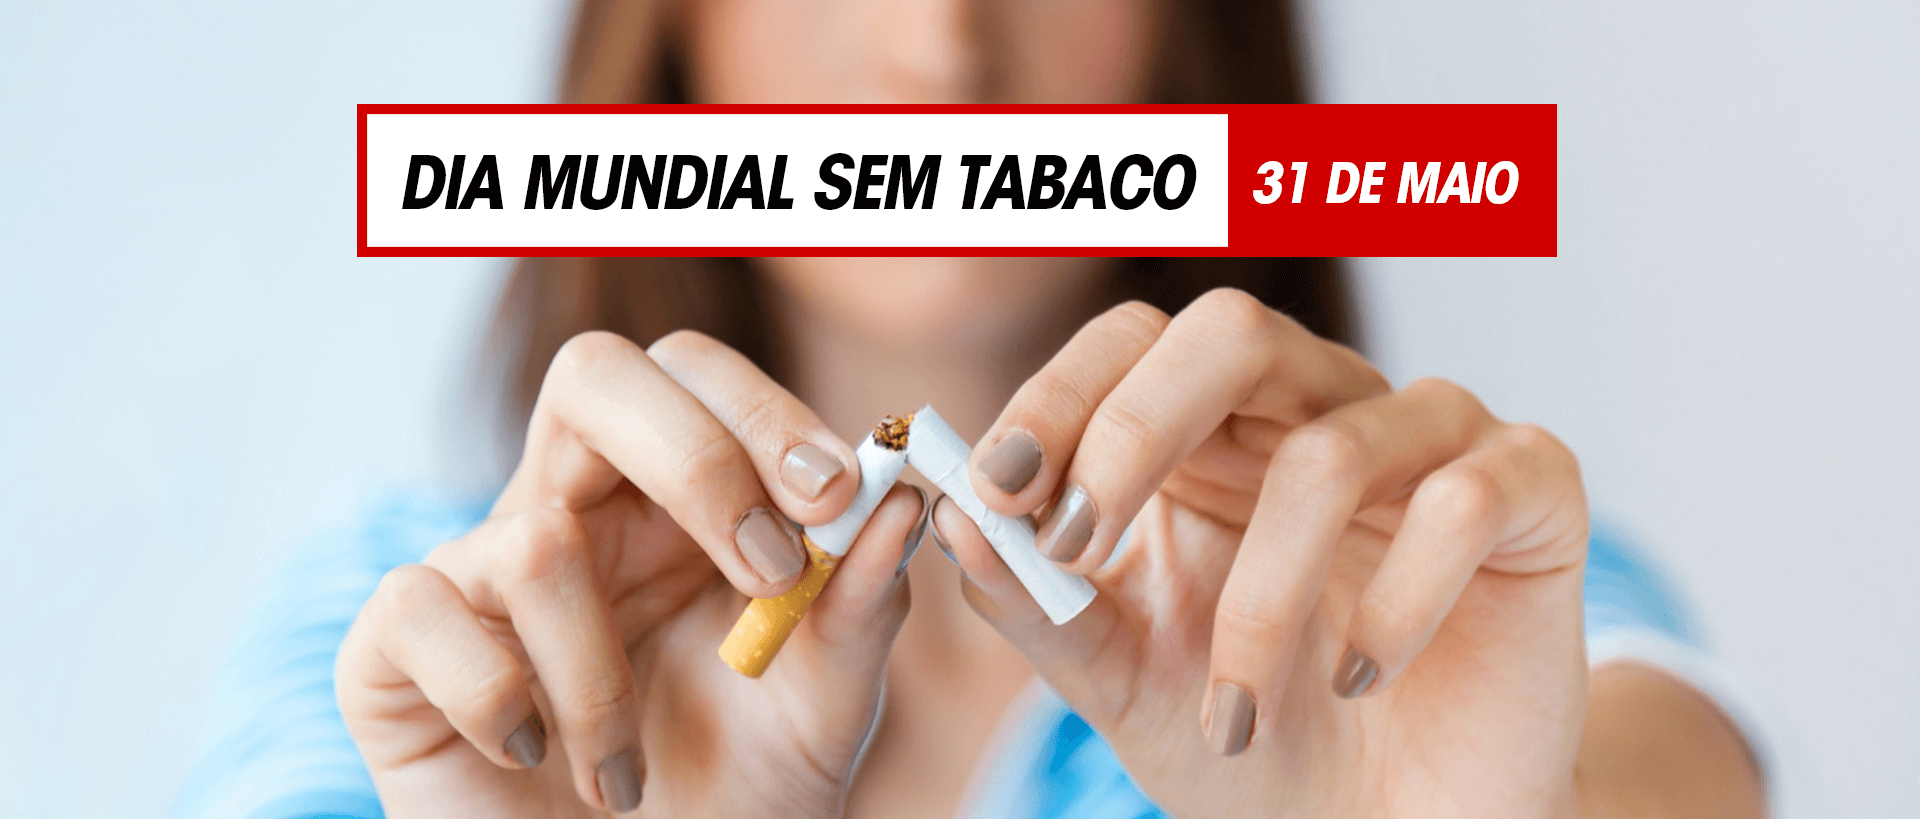 Dia mundial sem tabaco